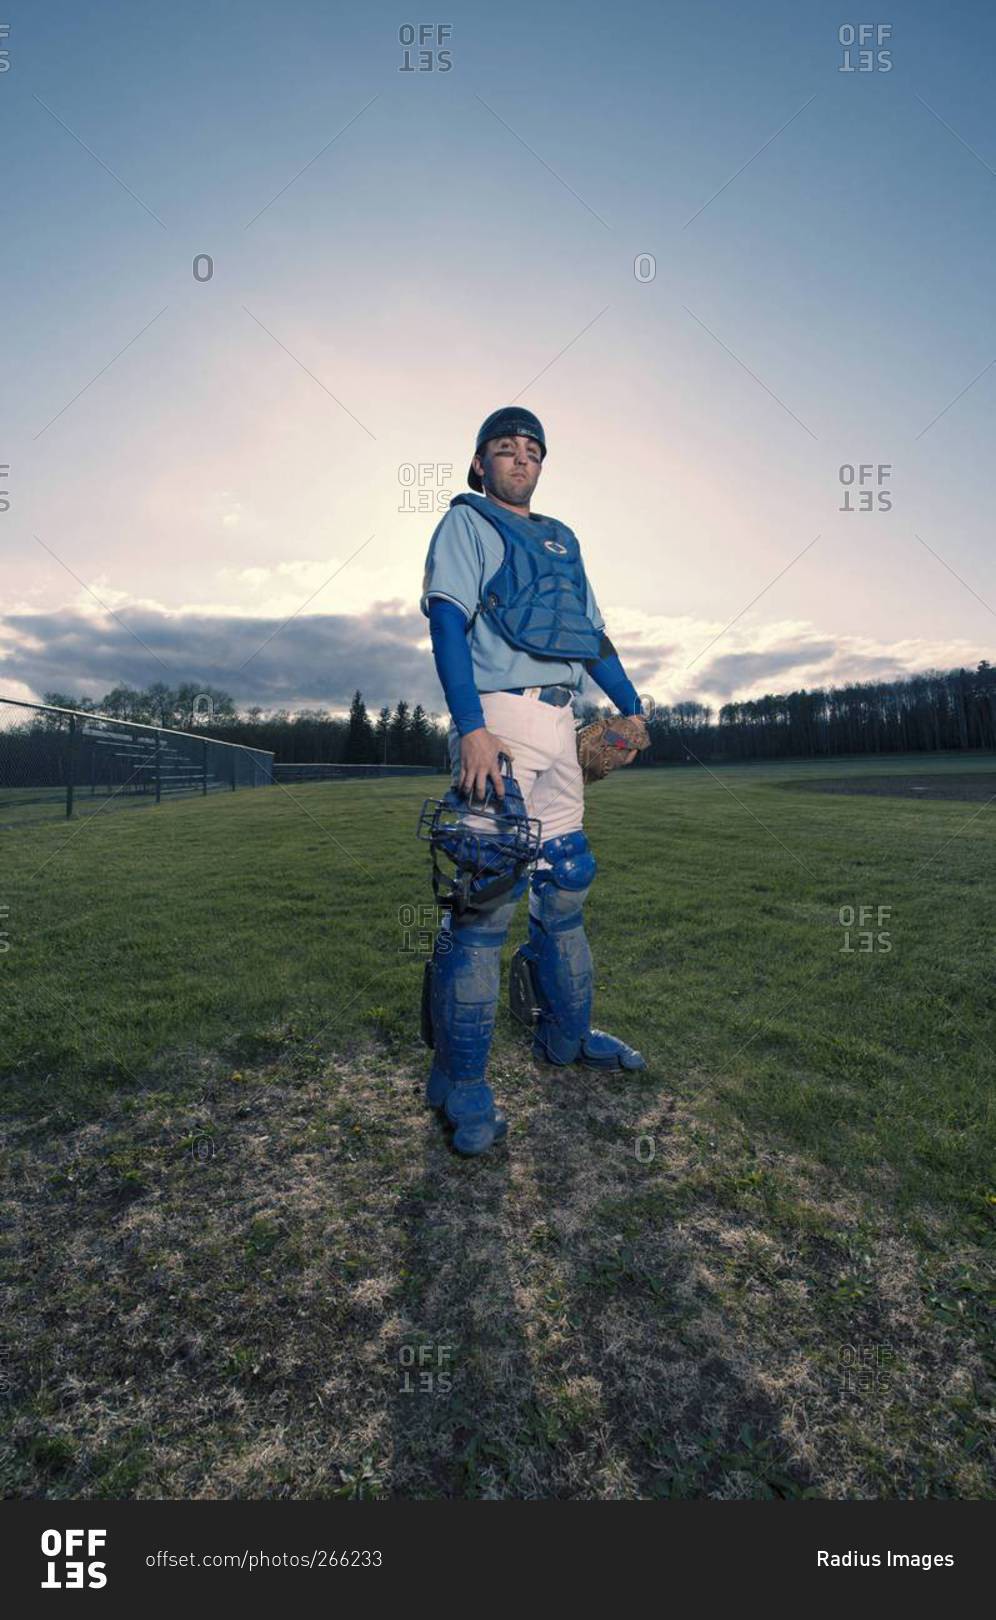 Portrait of Baseball Player, Saskatchewan, Canada